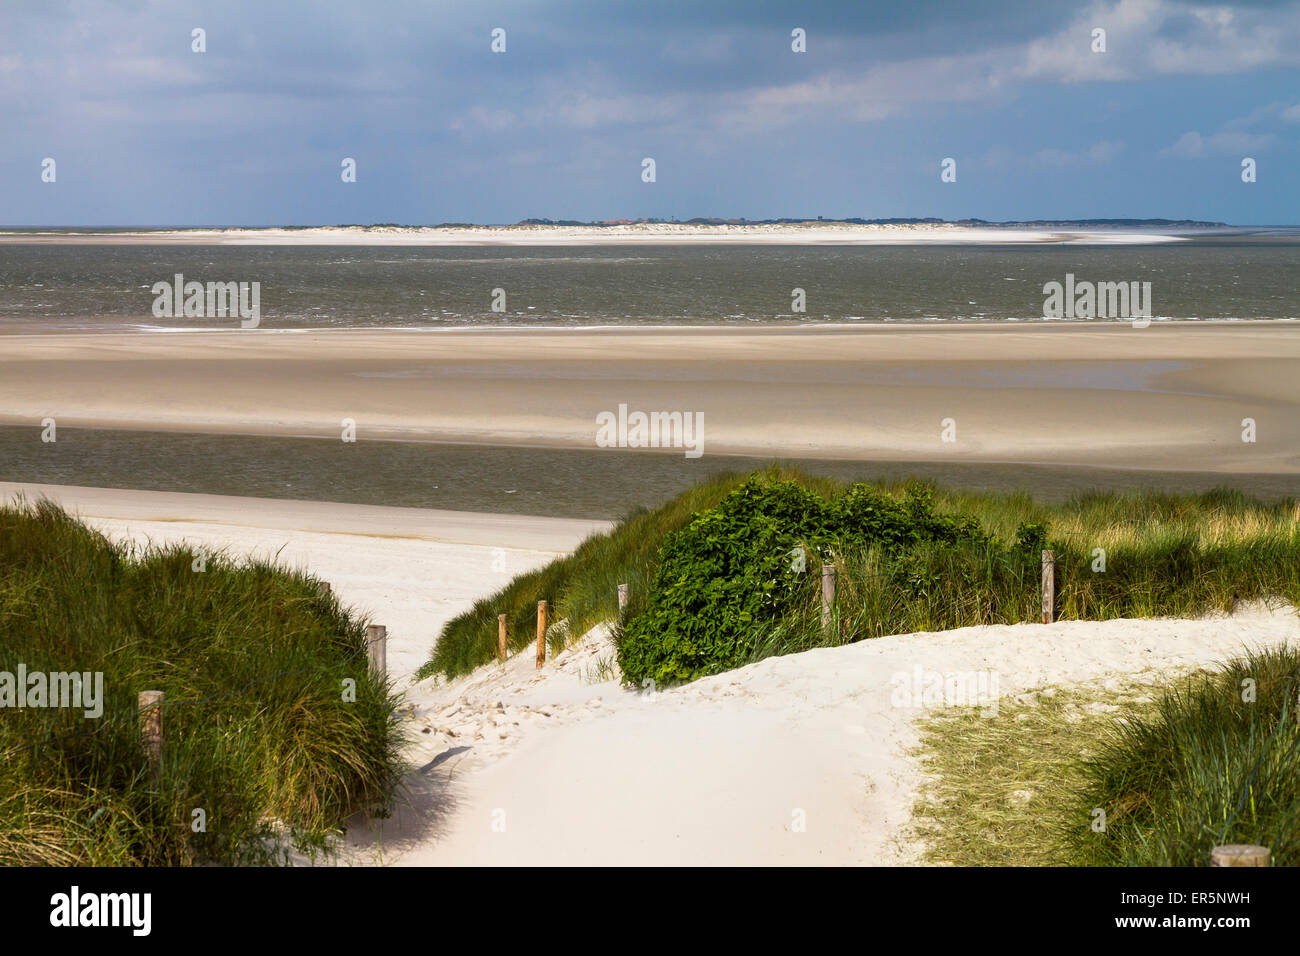 Dunes and beach, view to Baltrum Island, Langeoog Island, National park, Unesco World Heritage Site, North Sea, East Frisian Isl Stock Photo